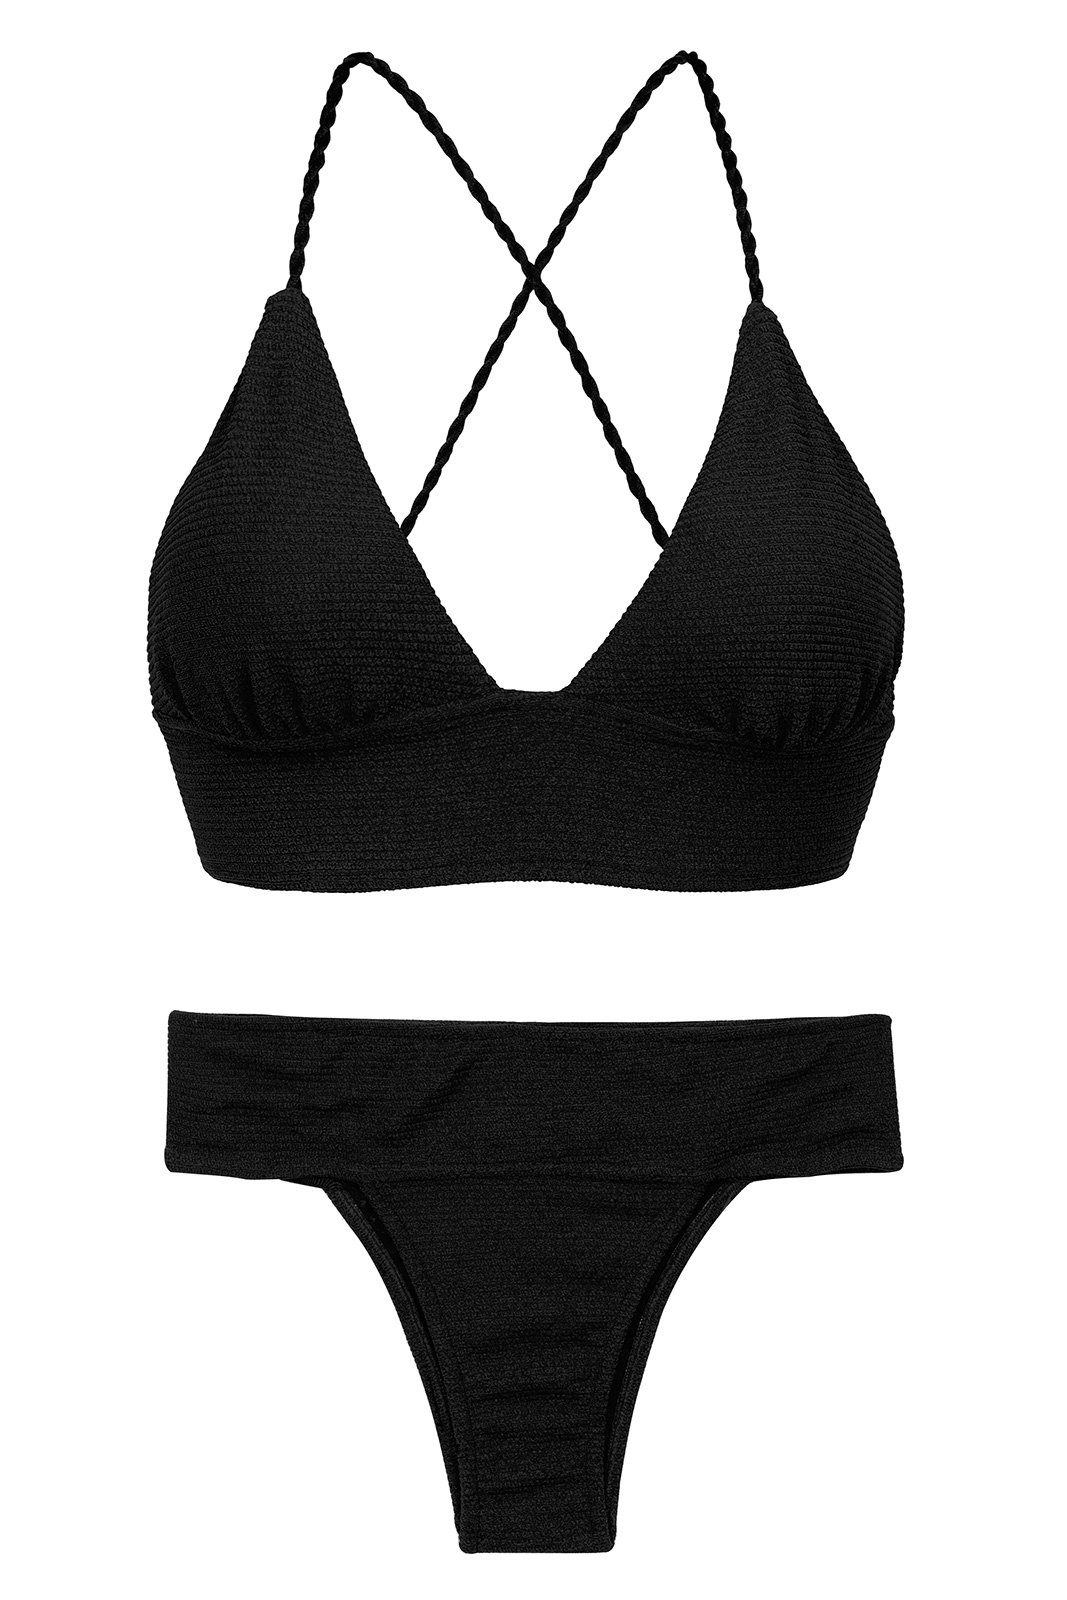 Textured Black Crossed Bralette Bikini Set St Tropez Black Tri Cos My Xxx Hot Girl